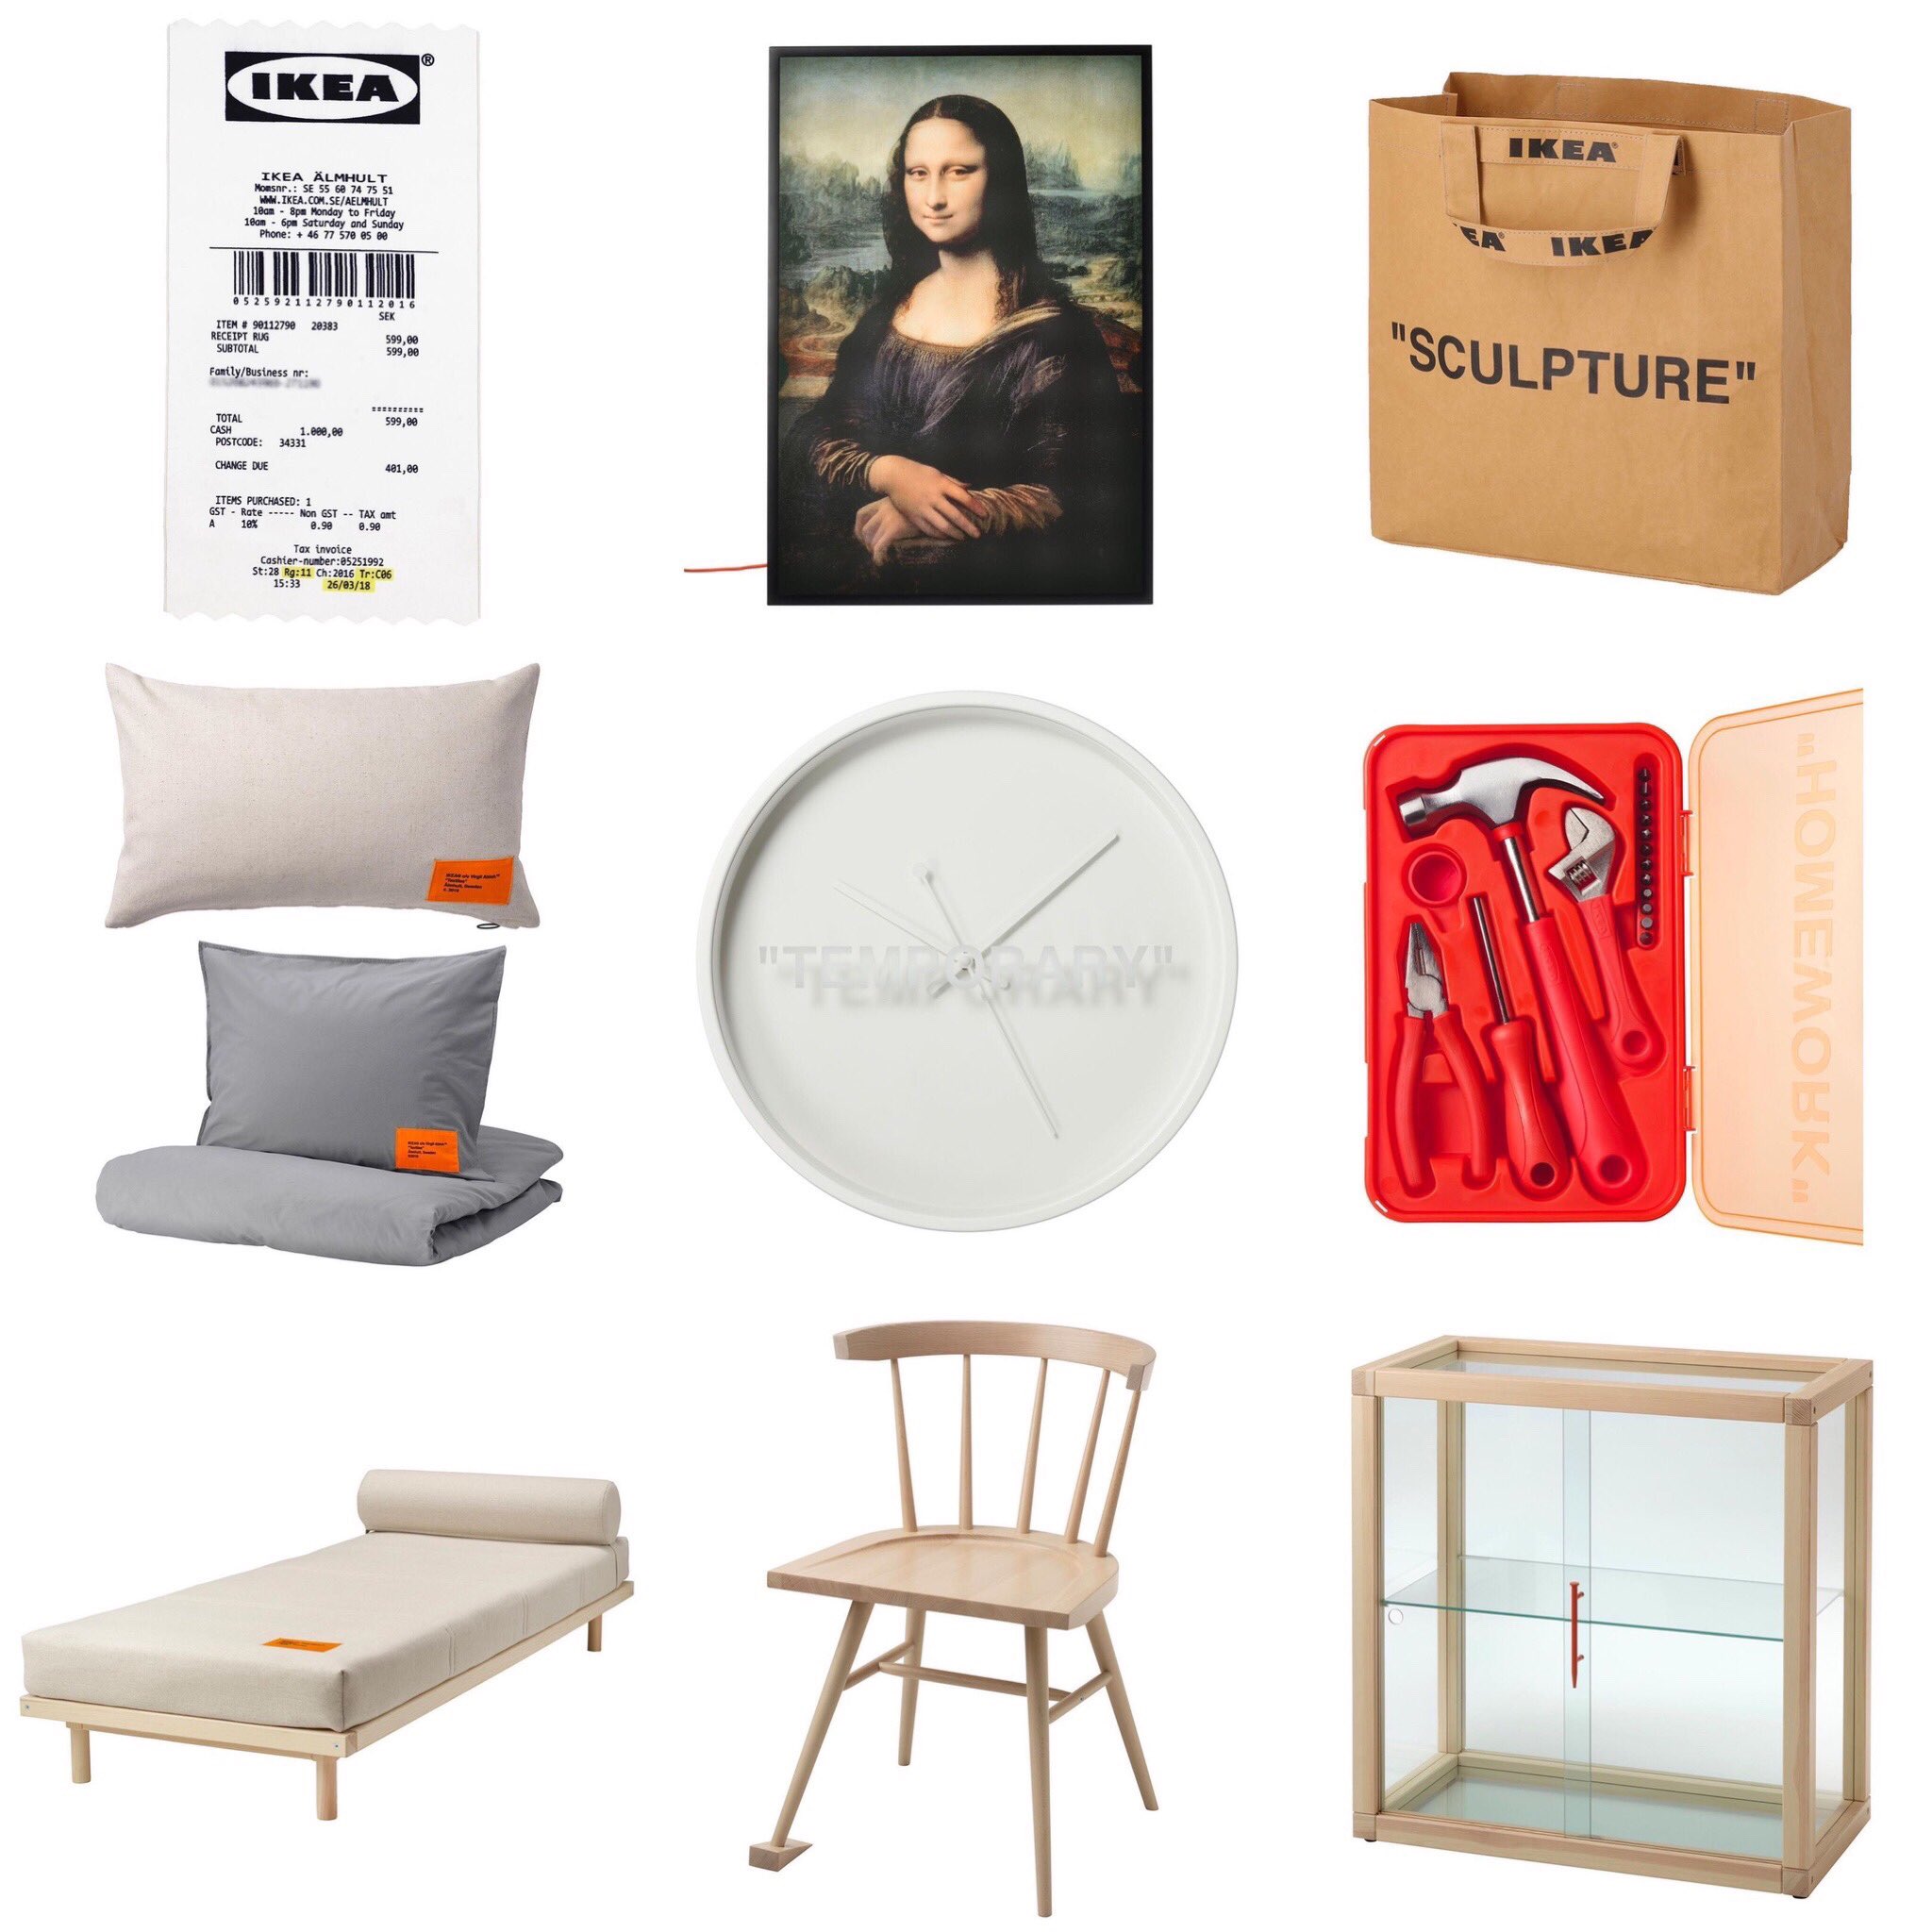 Ovrnundr on X: Virgil Abloh x IKEA “MARKERAD” collection